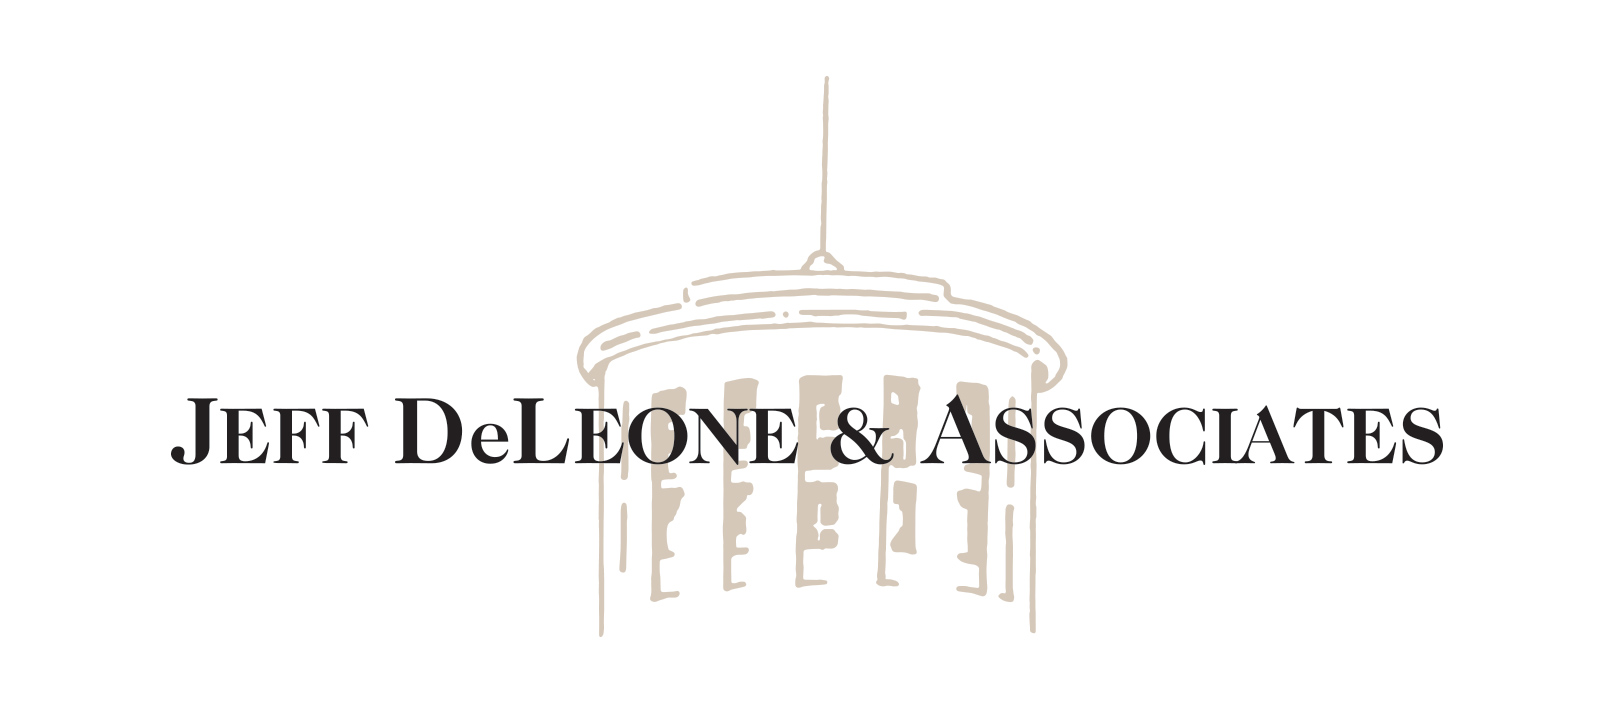 DeLeone & Associates